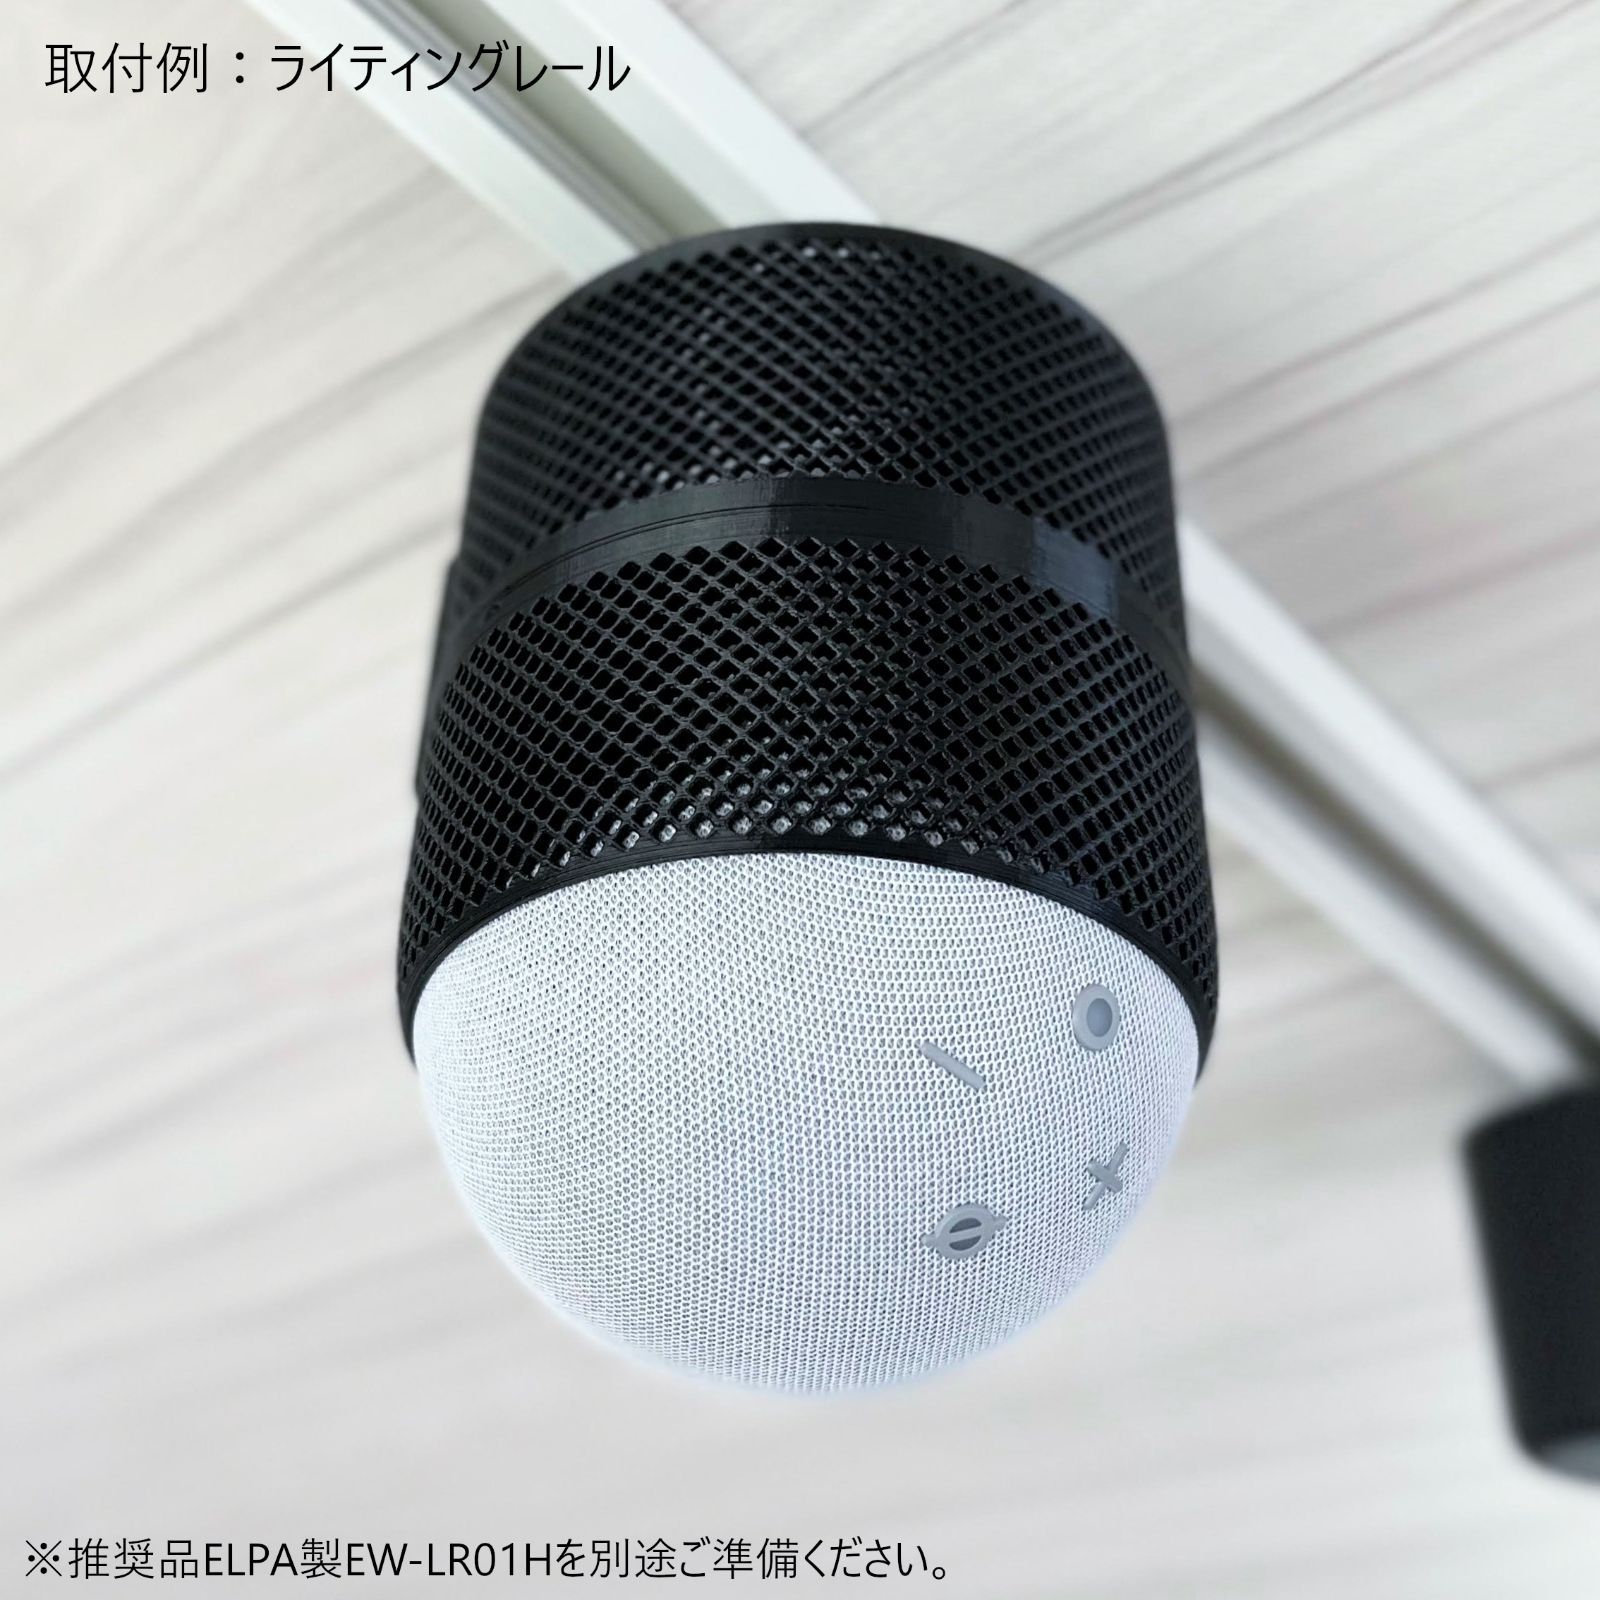 Echo Dot 第4/5世代専用 マルチ取付ブラケット[A4S] - メルカリ